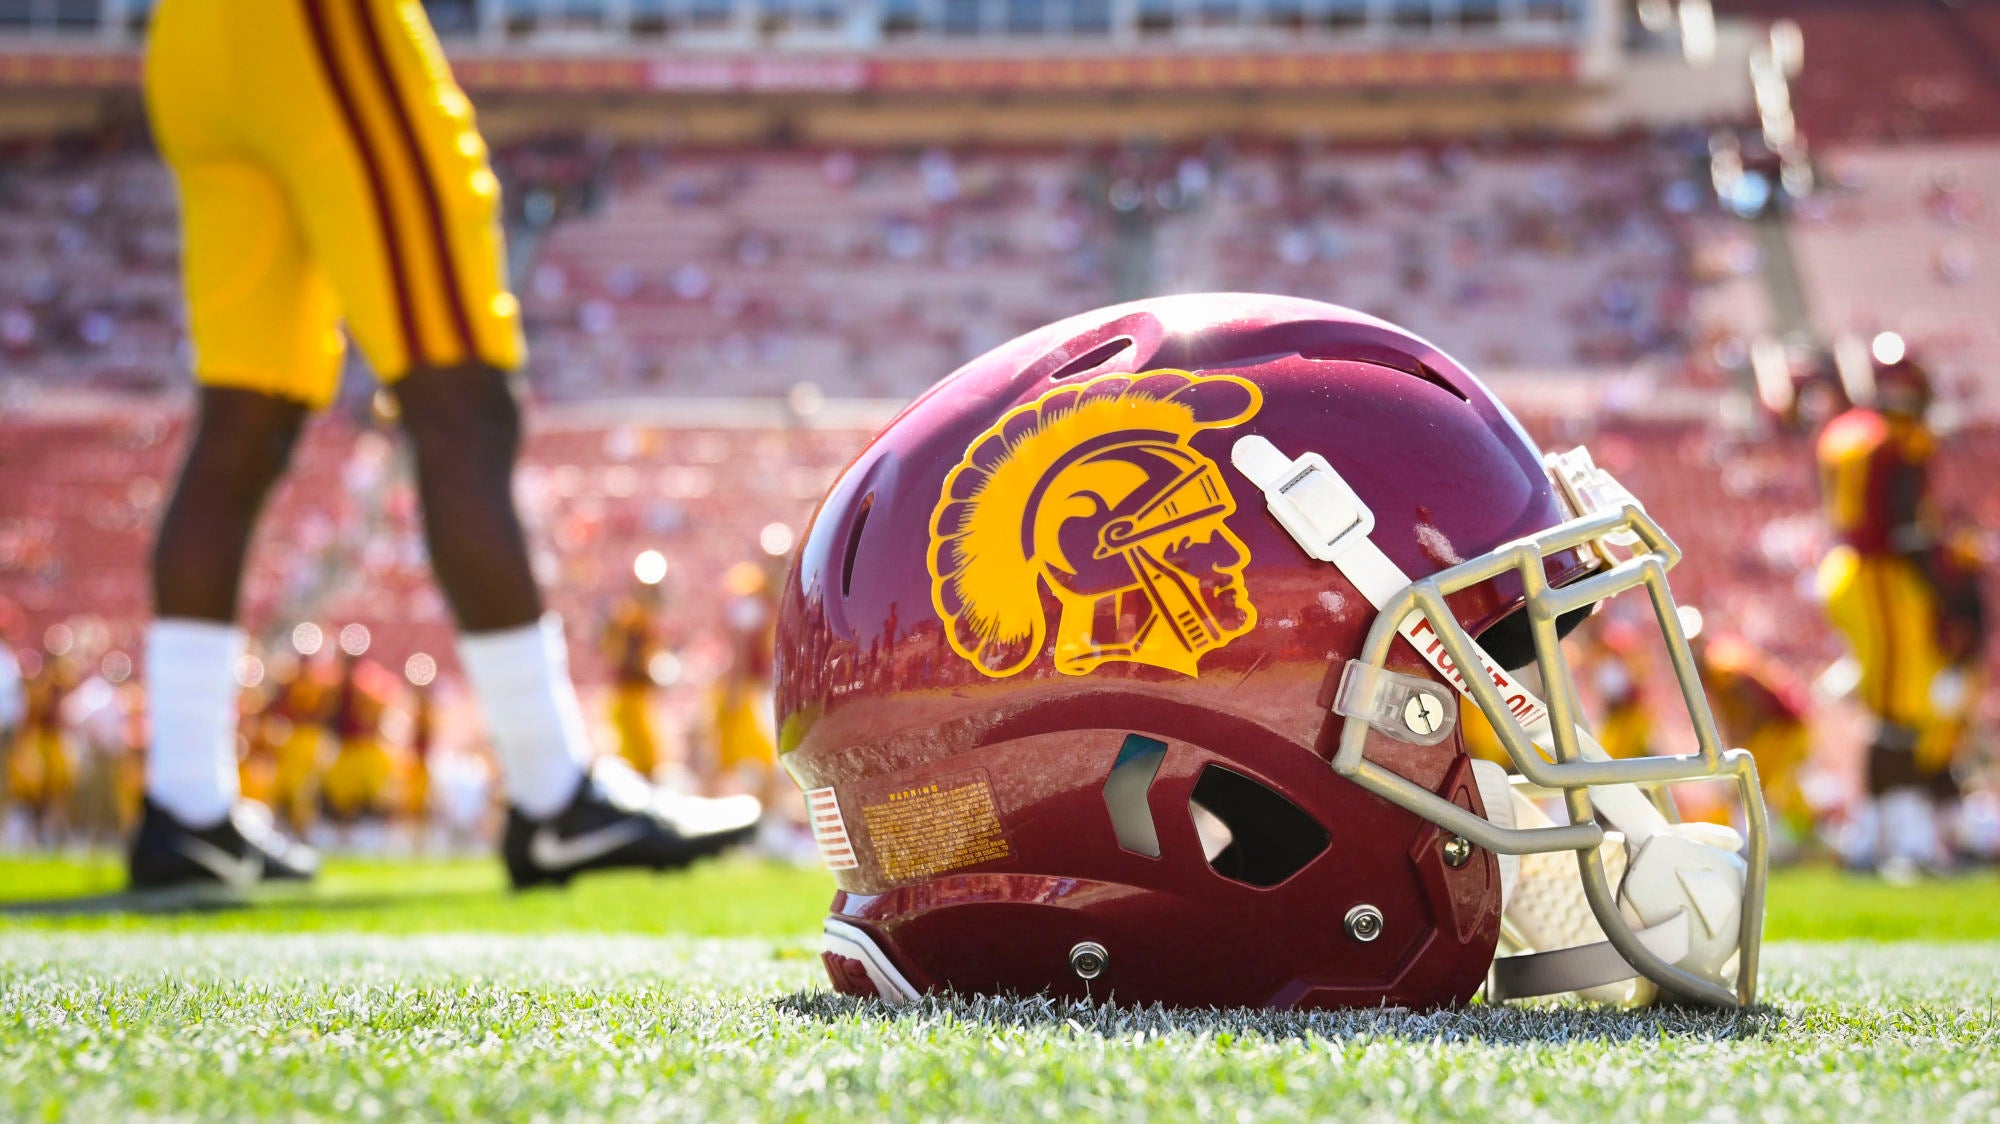 USC Trojans football helmet on the field at LA Memorial Coliseum